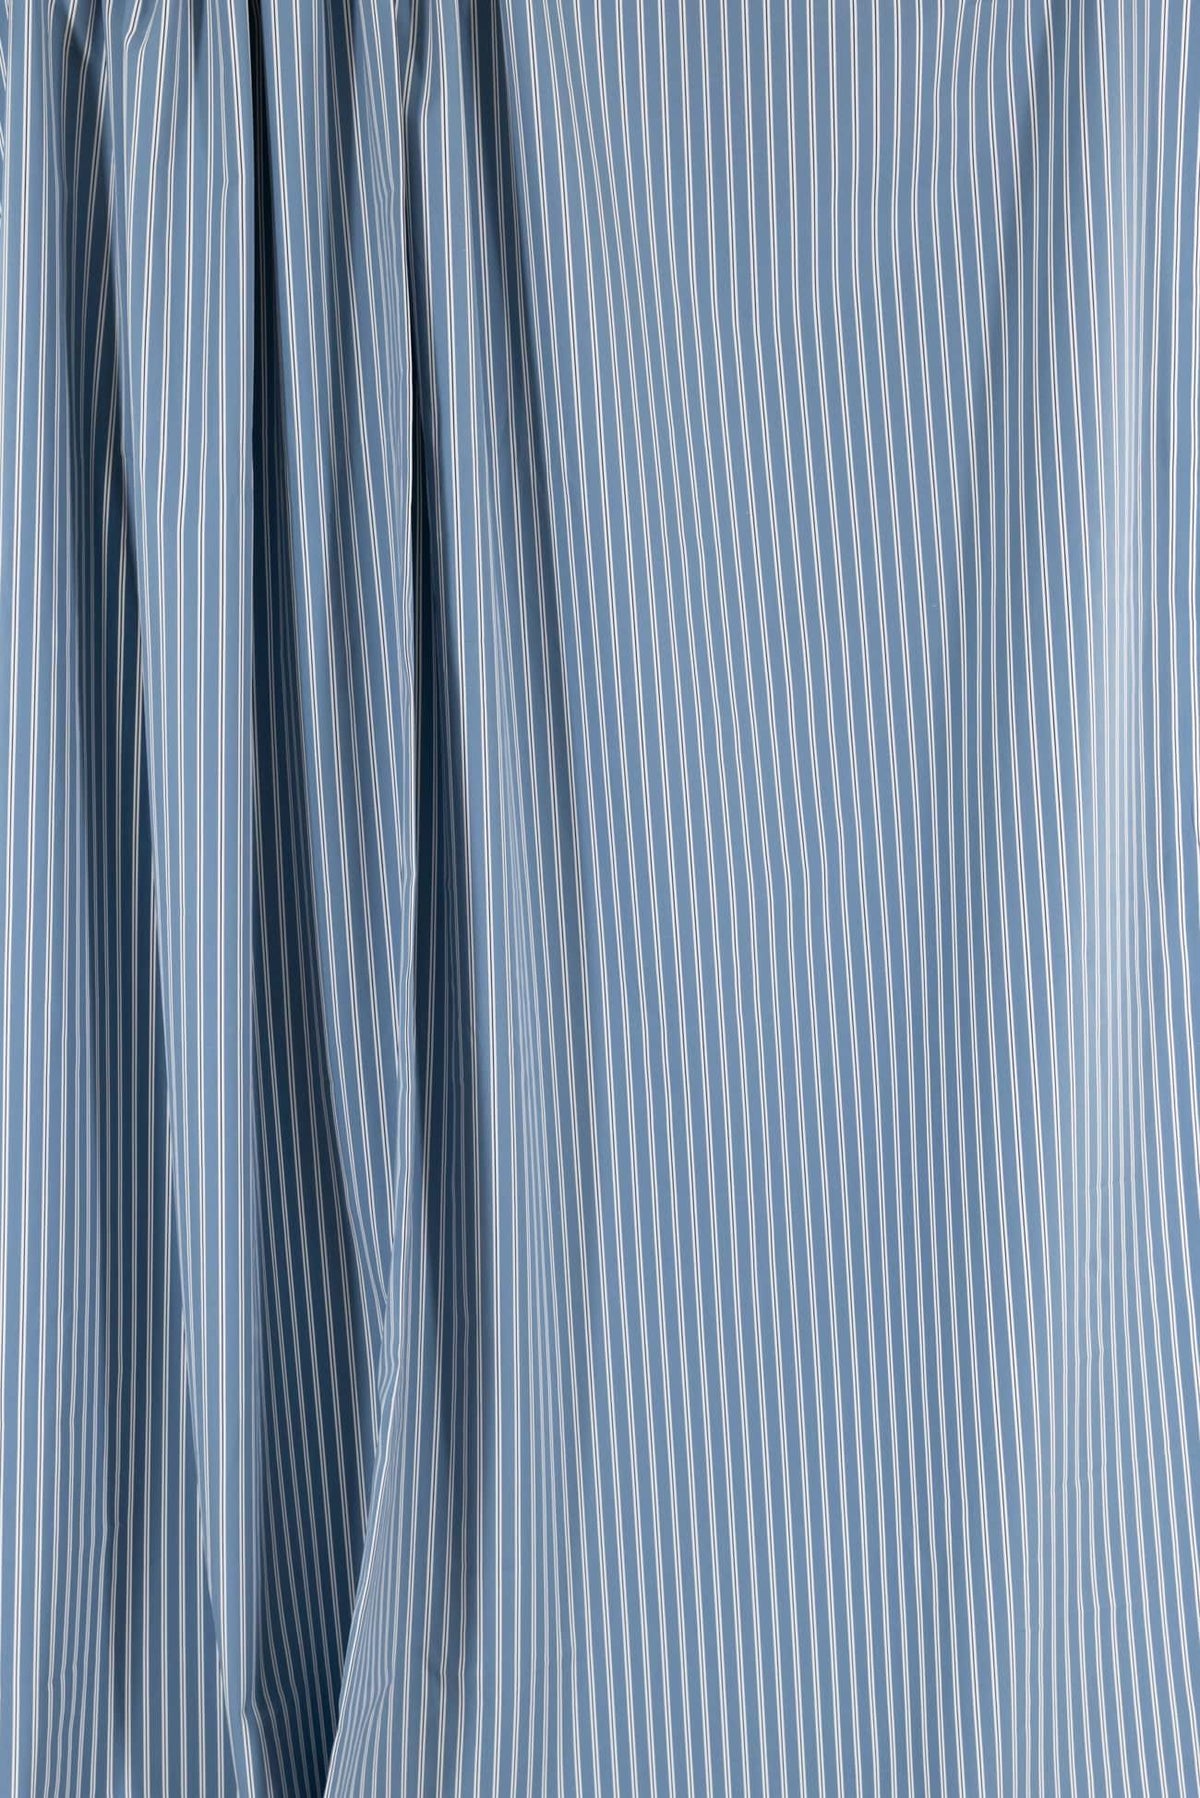 Bodega Bay Stripe Cotton Woven - Marcy Tilton Fabrics